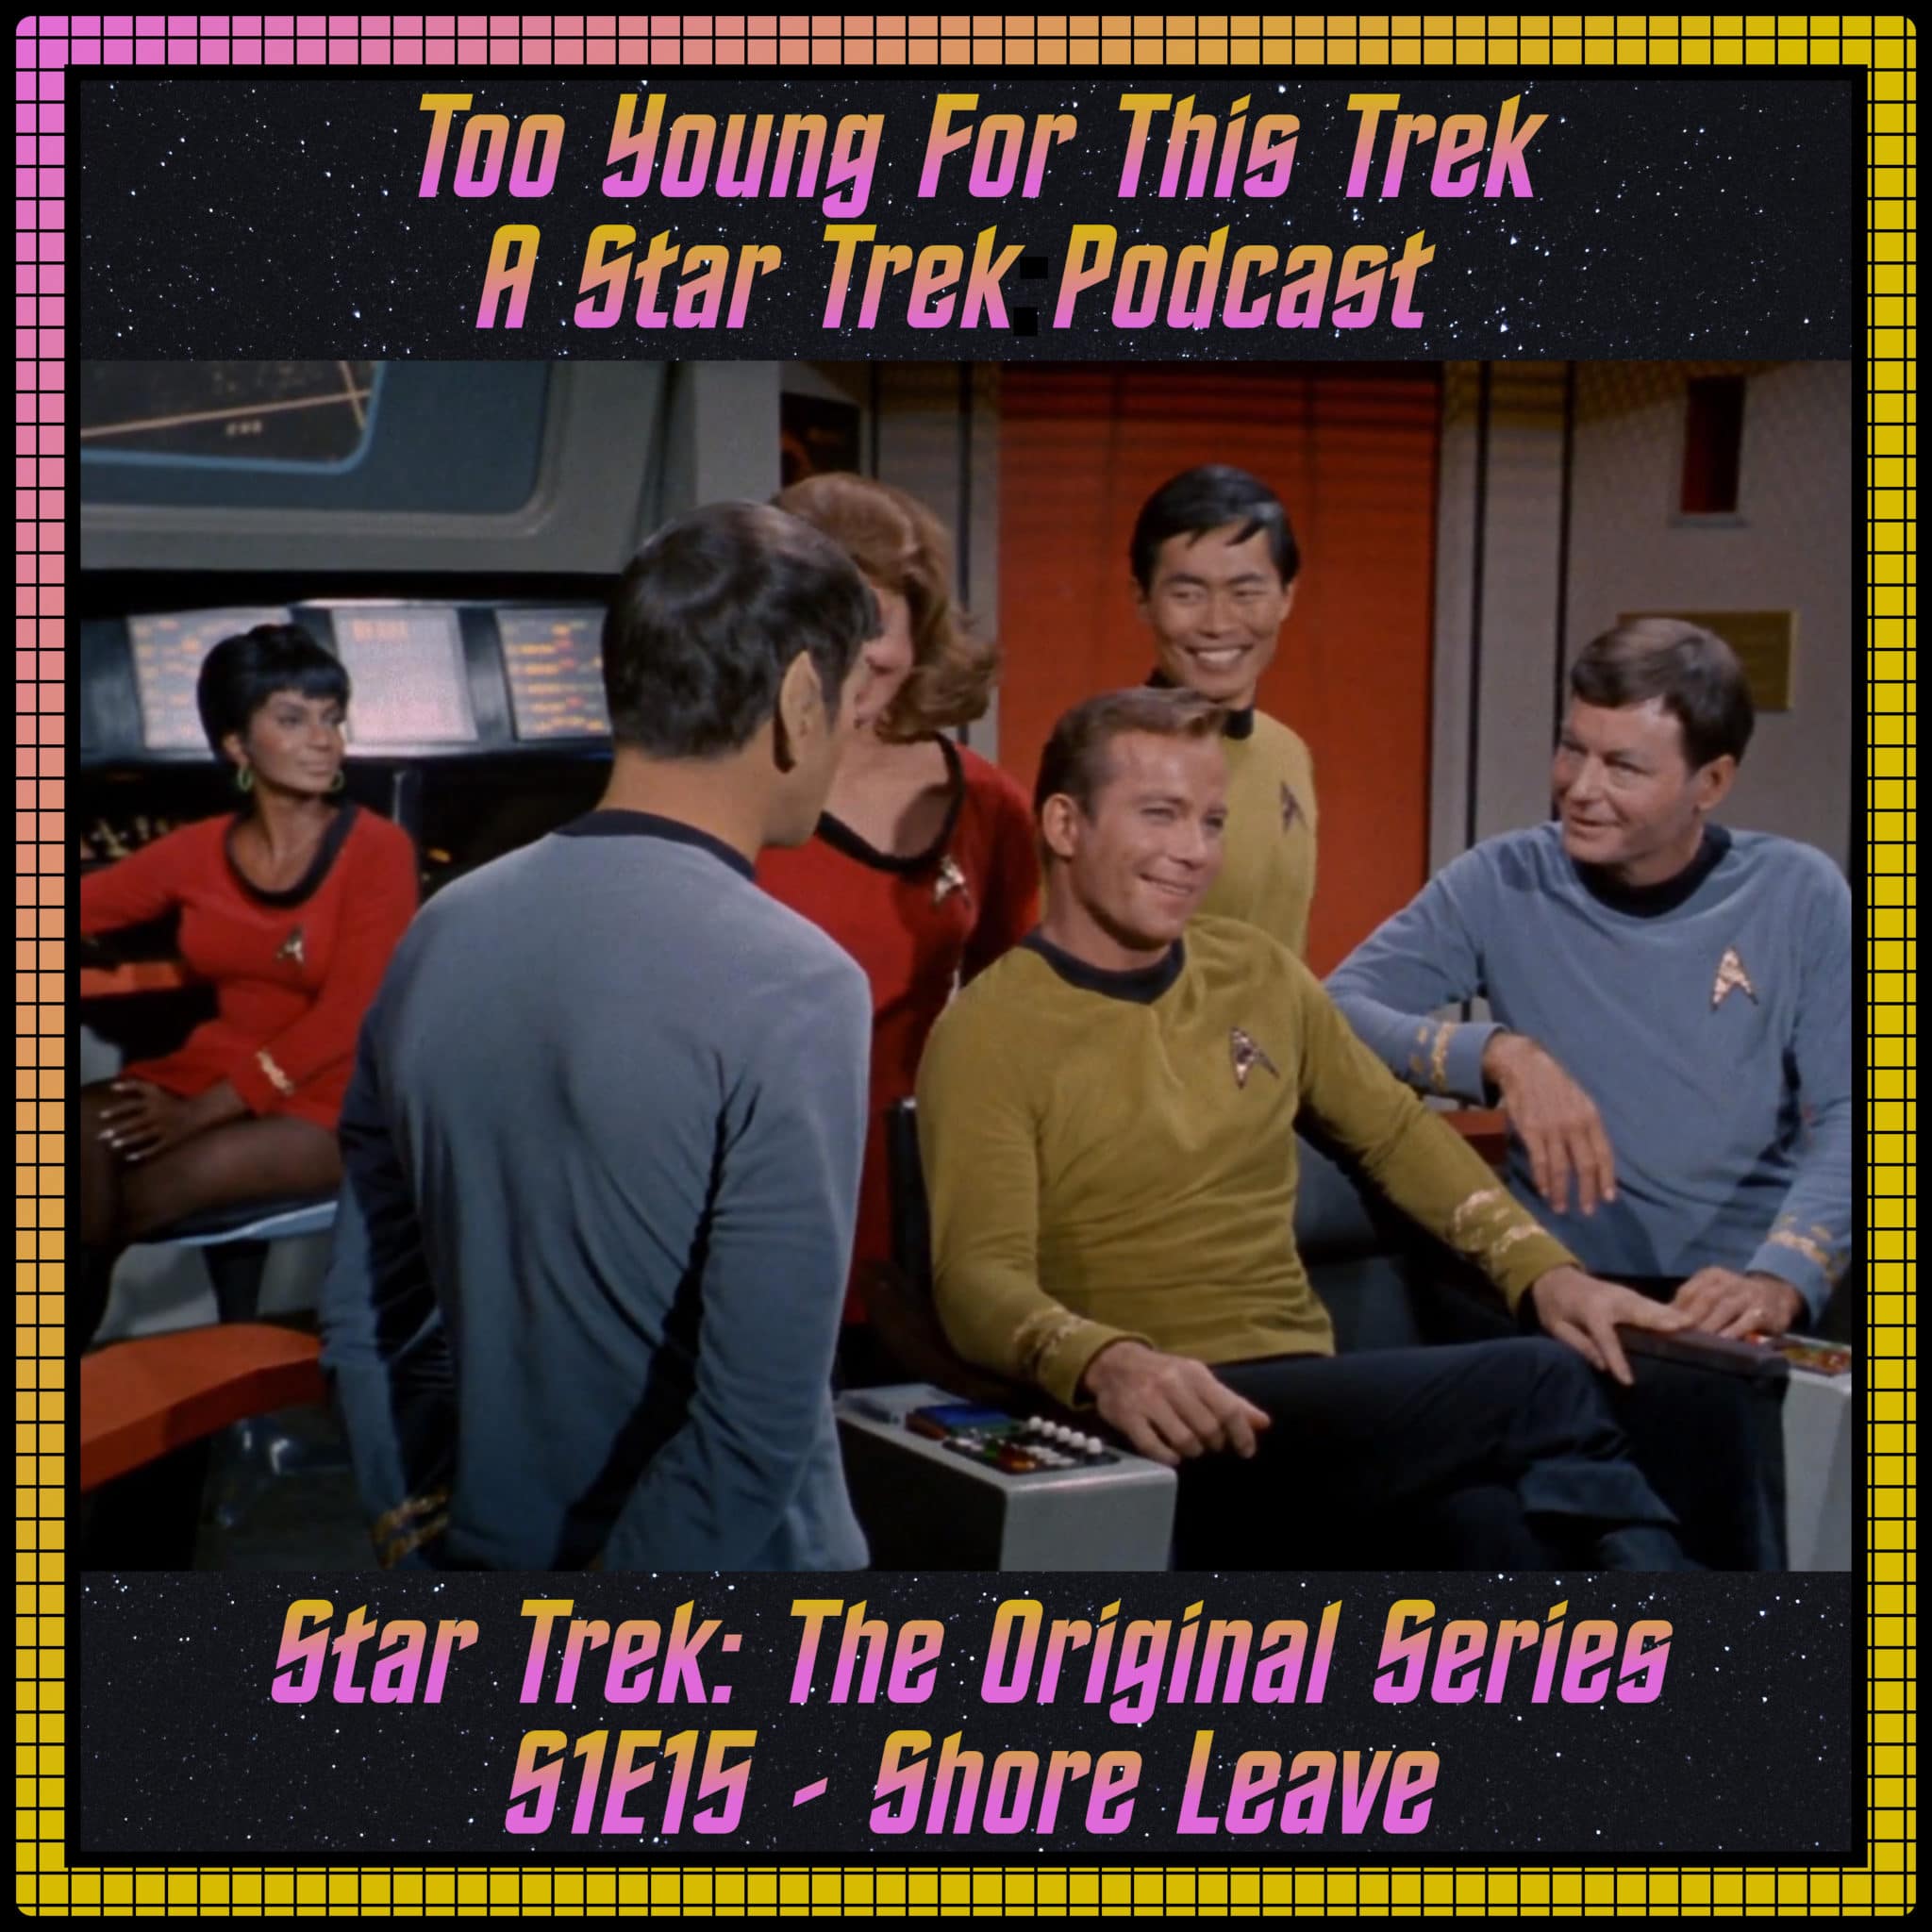 Star Trek: The Original Series S1E15 - Shore Leave